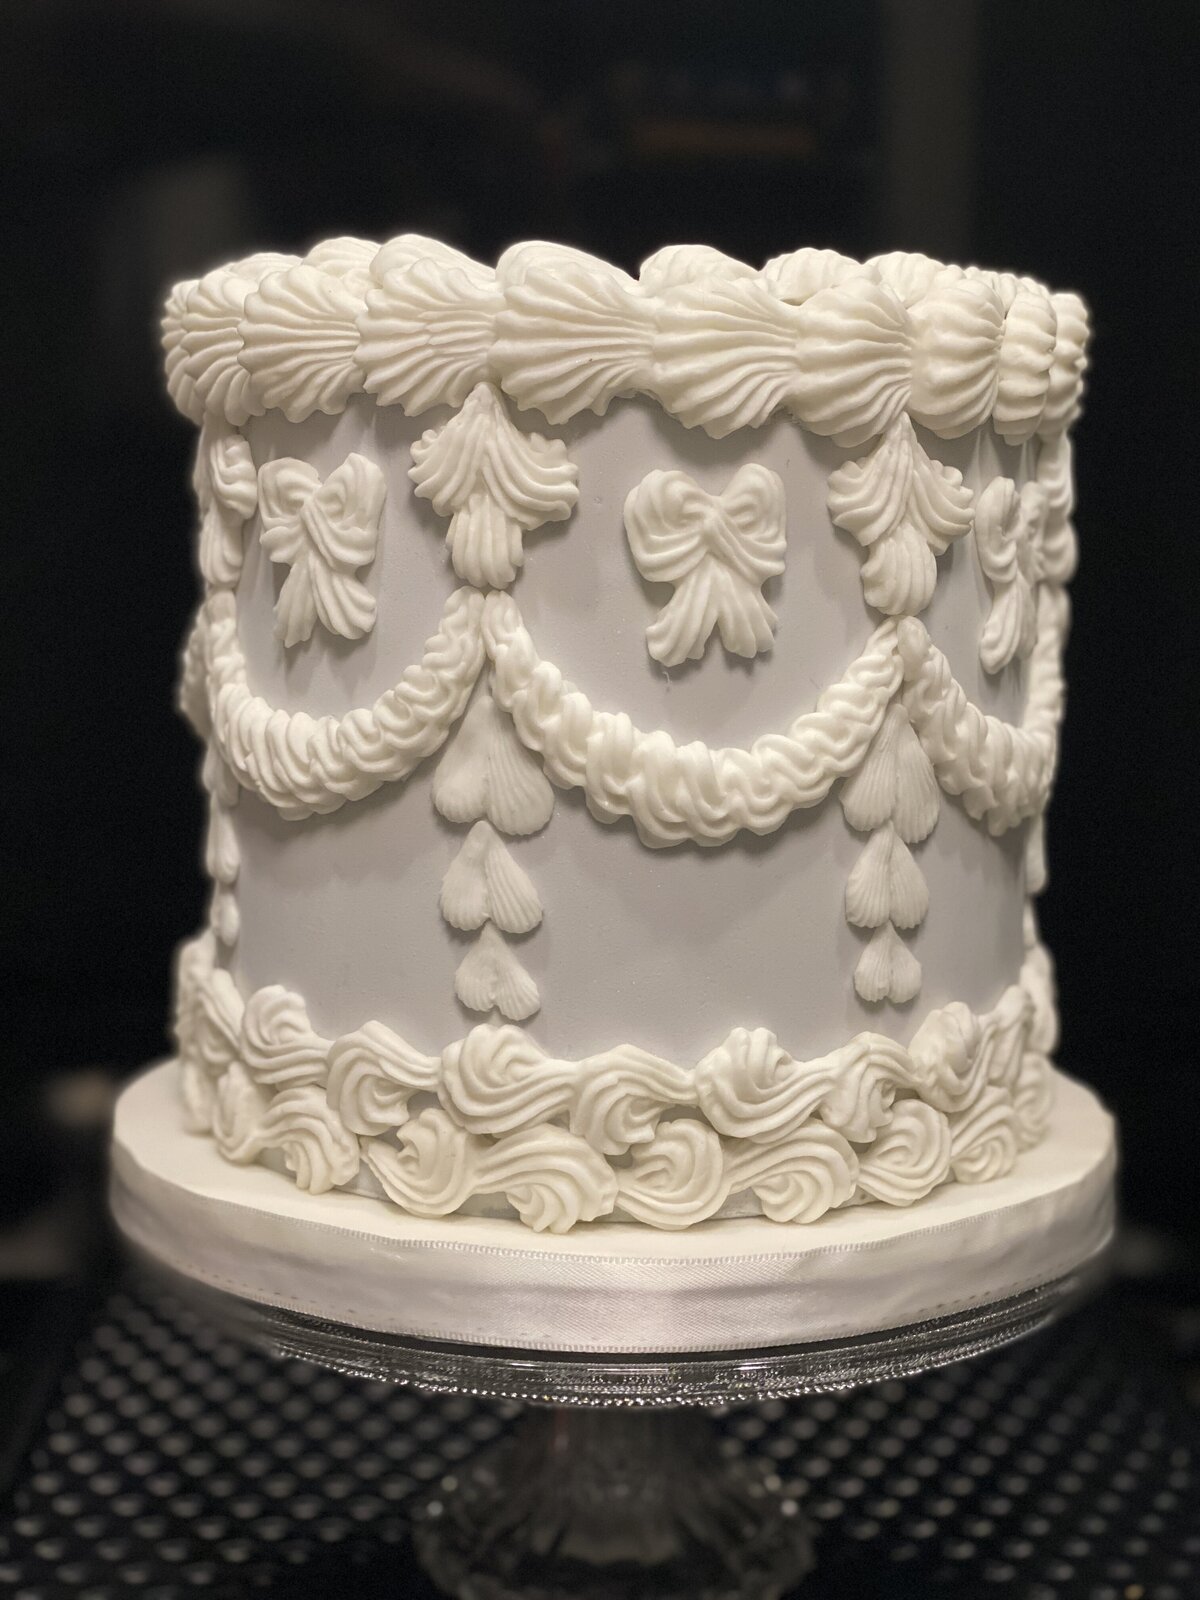 greay and white lambeth birthday cake